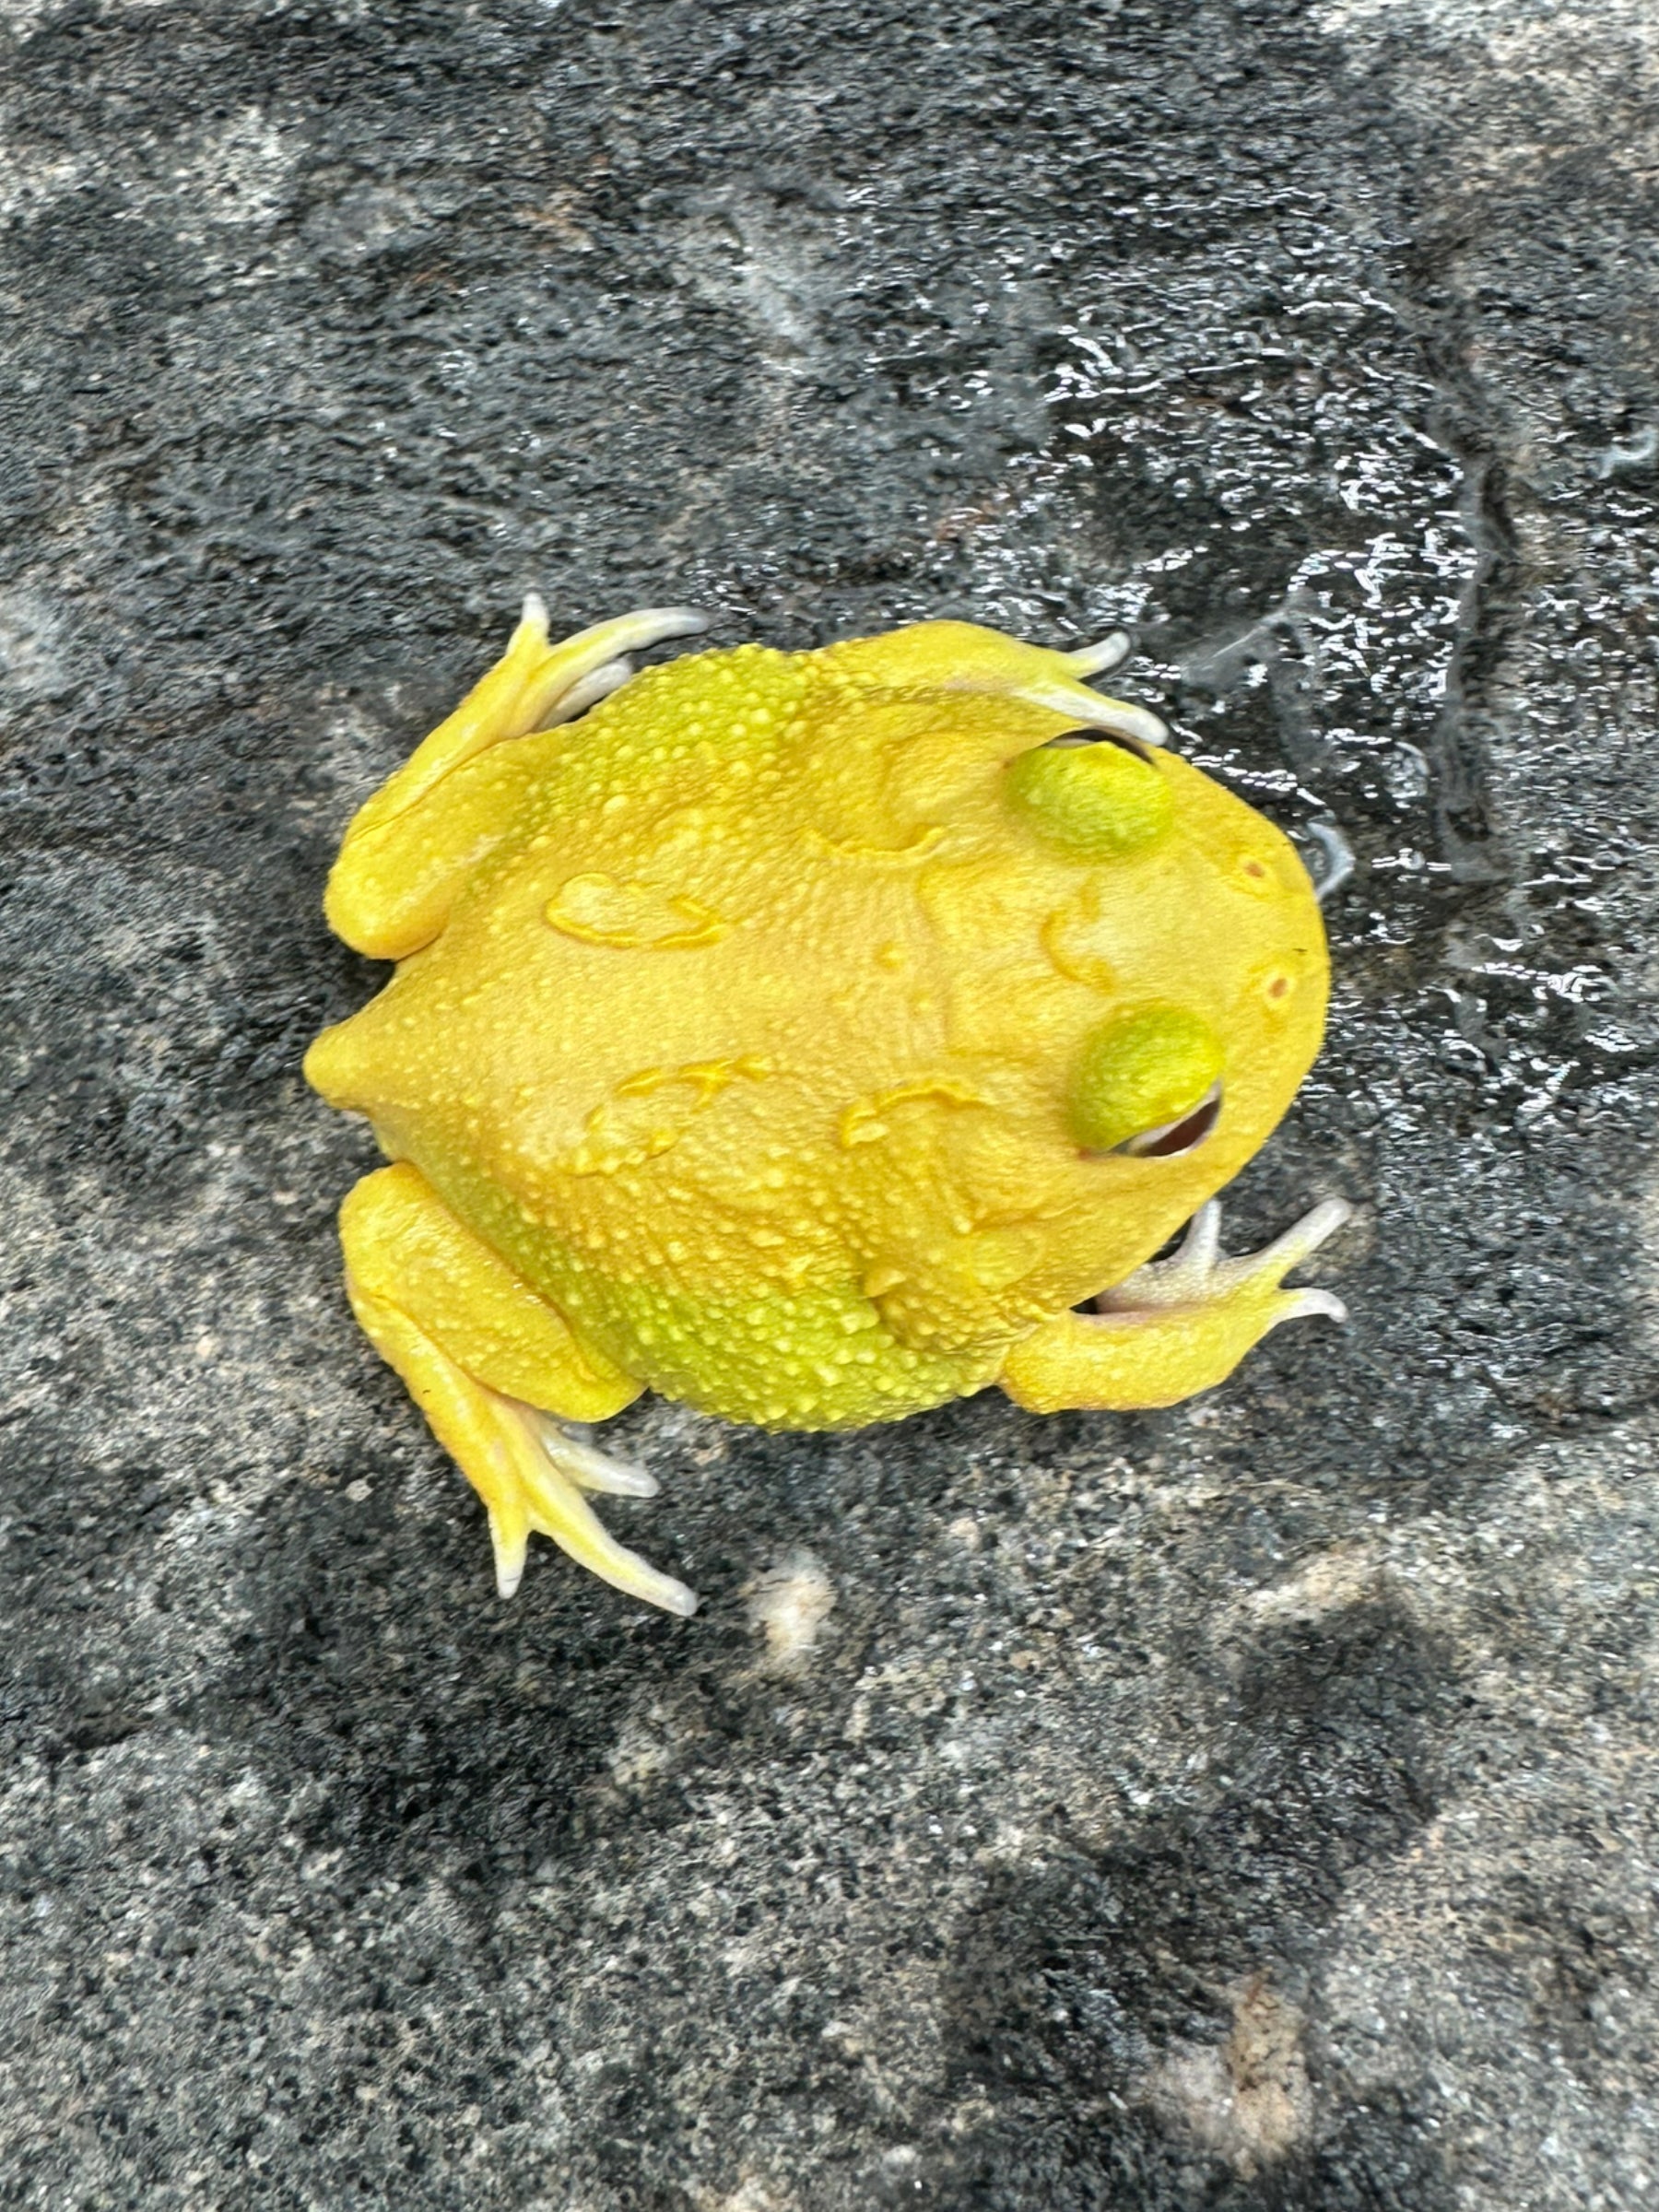 Pacman Frog (Super Pikachu) CBB